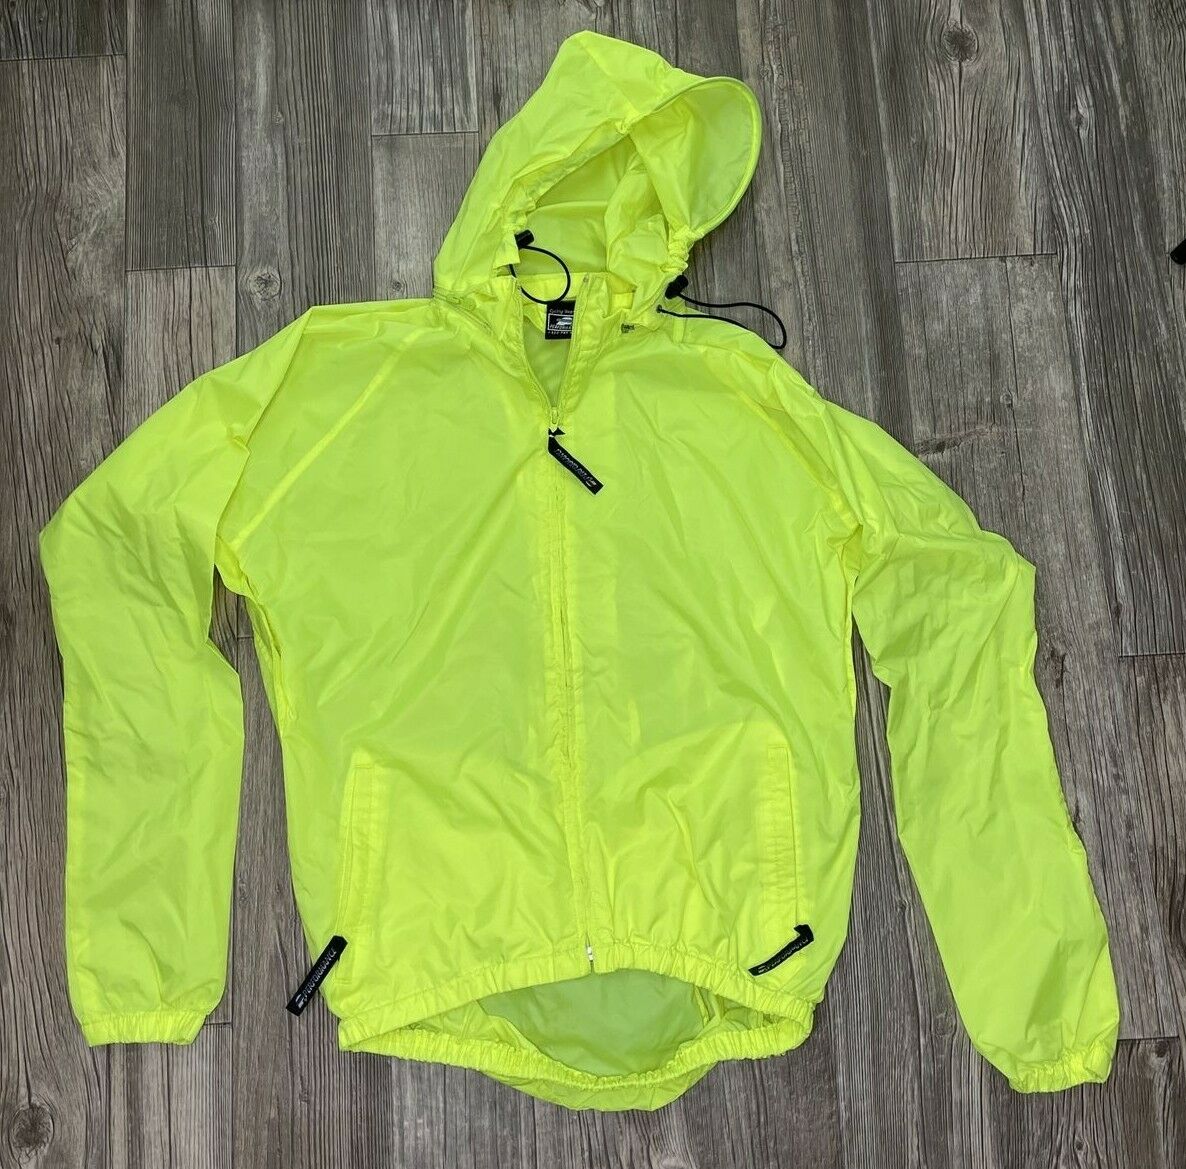 Performance Hi Vis Nylon Rain Cycling Jacket With Removable Hood Size M